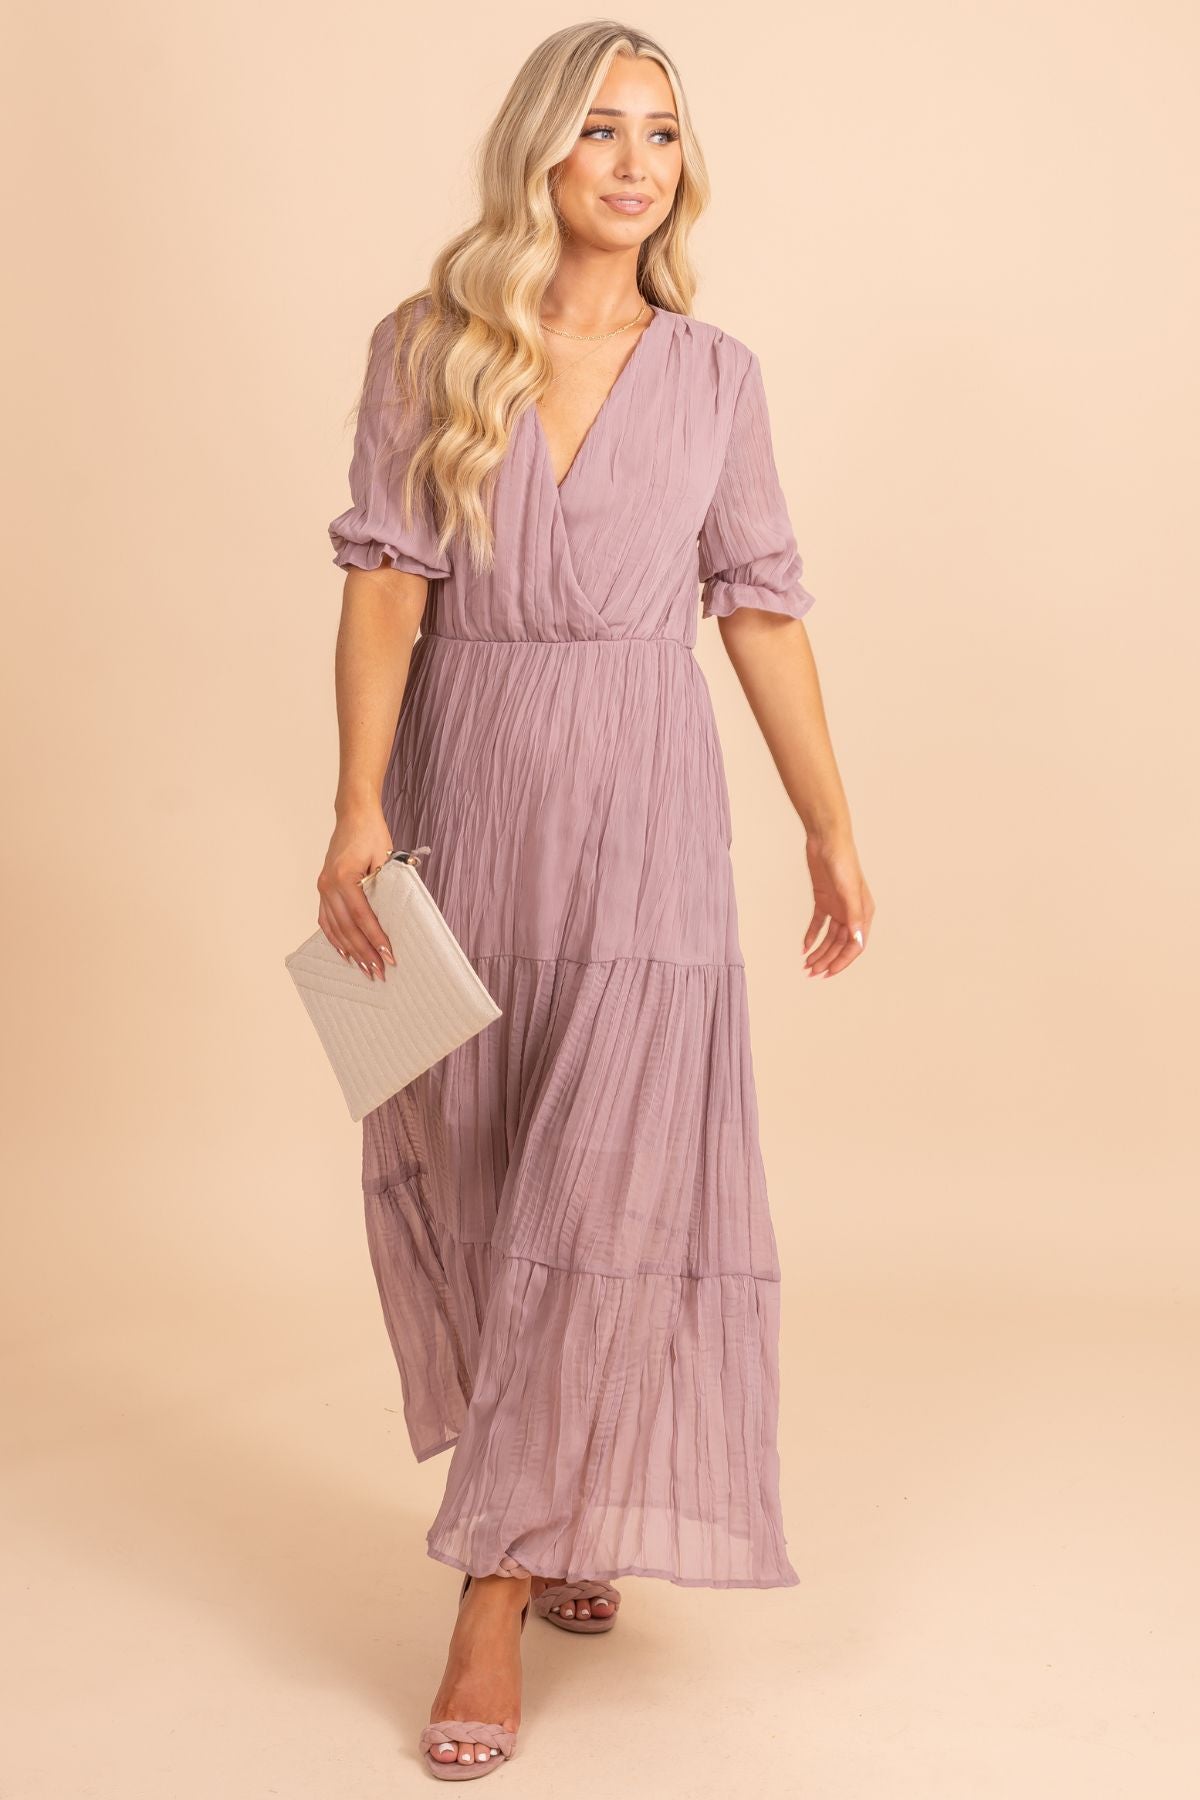 Women's Interior Lined Boutique Purple Maxi Dress